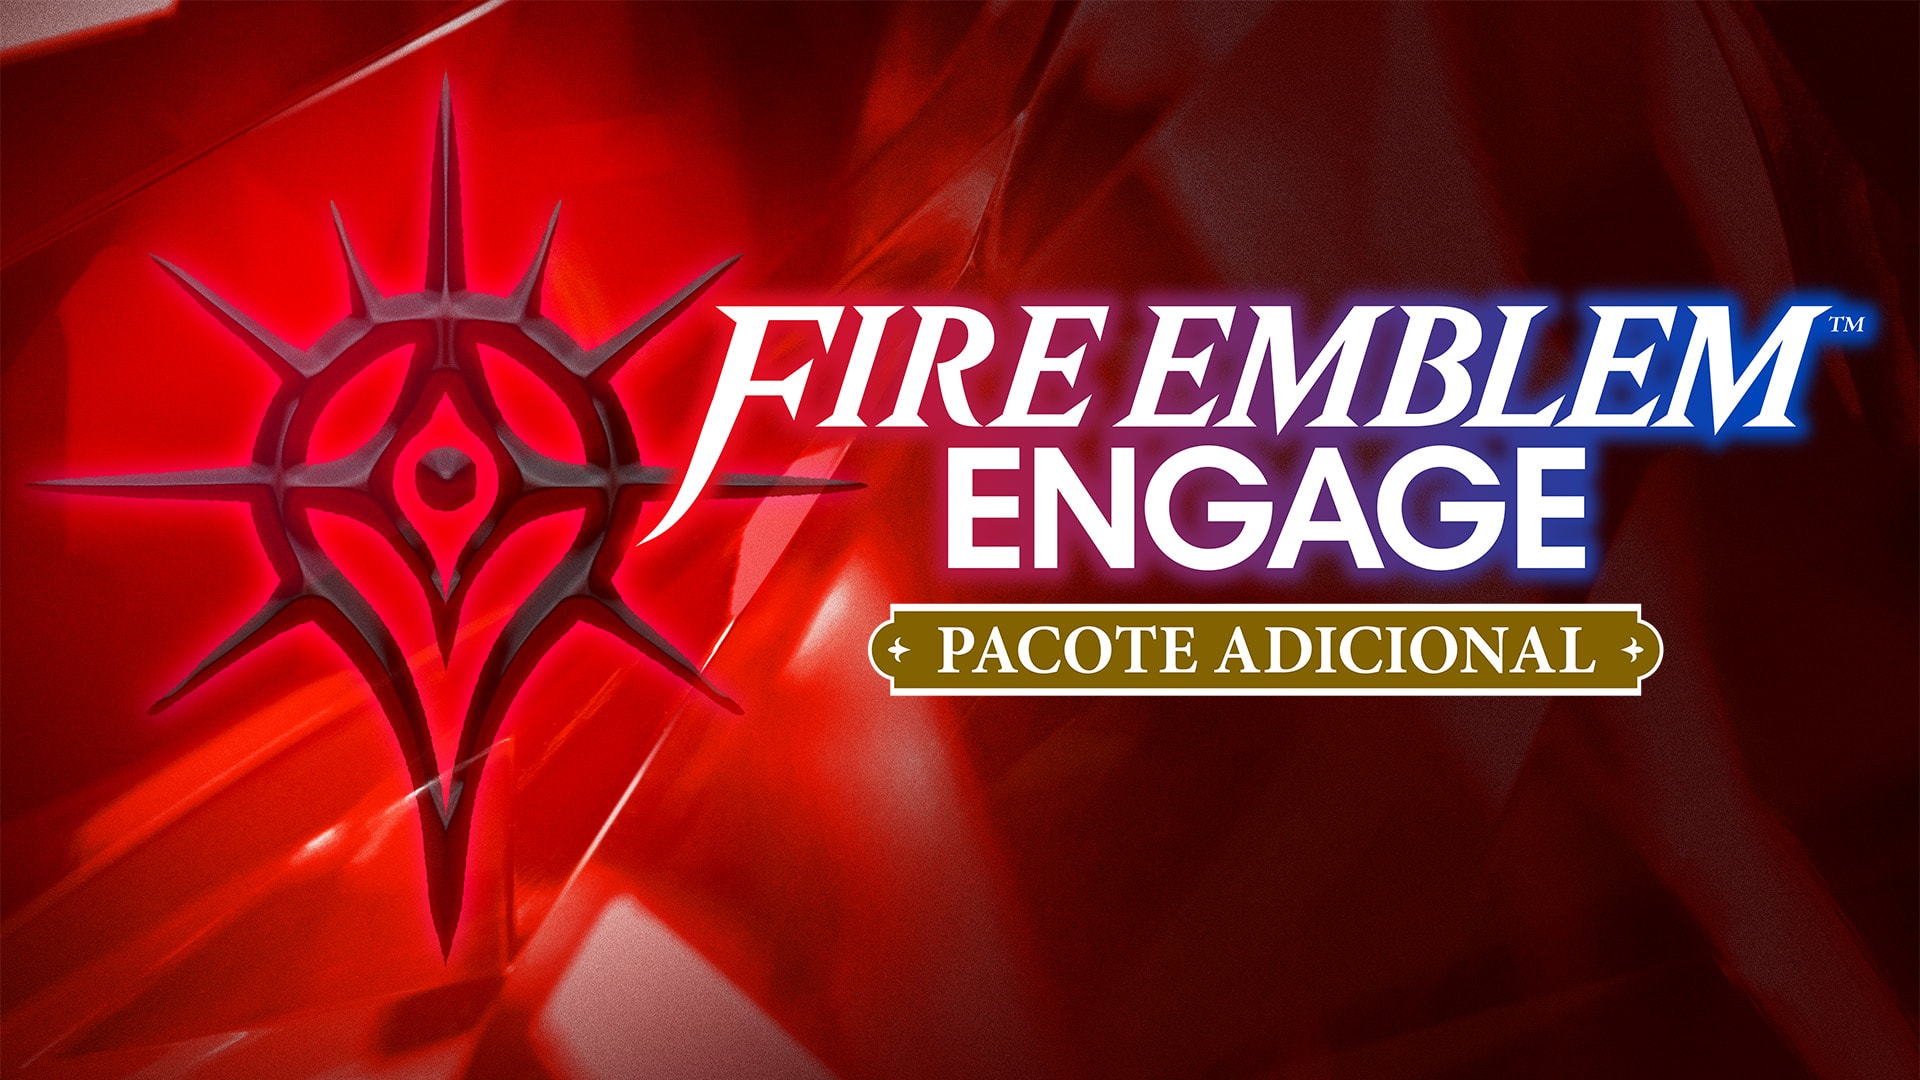 Fire Emblem™ Engage Pacote adicional 